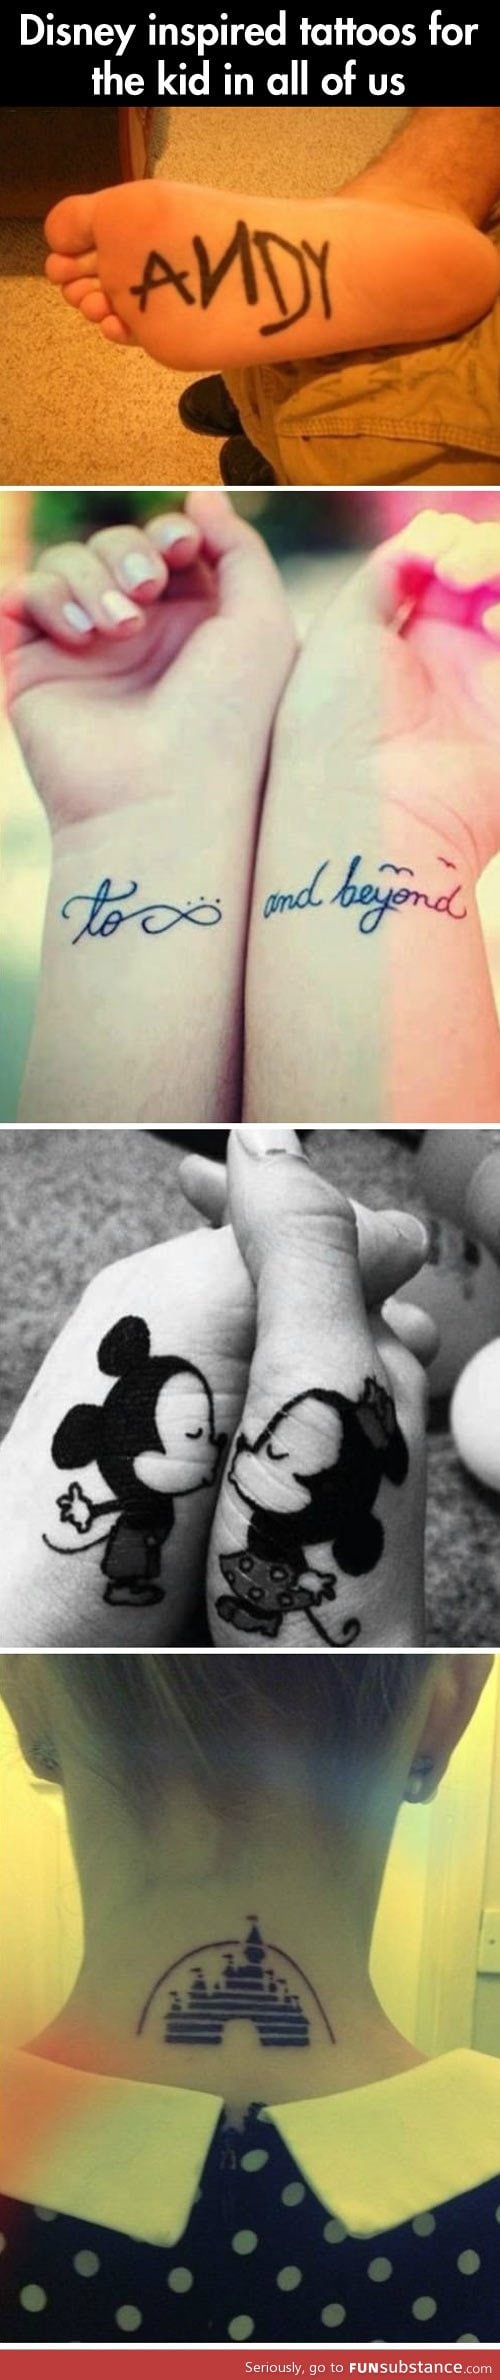 Beautiful Disney inspired tattoos